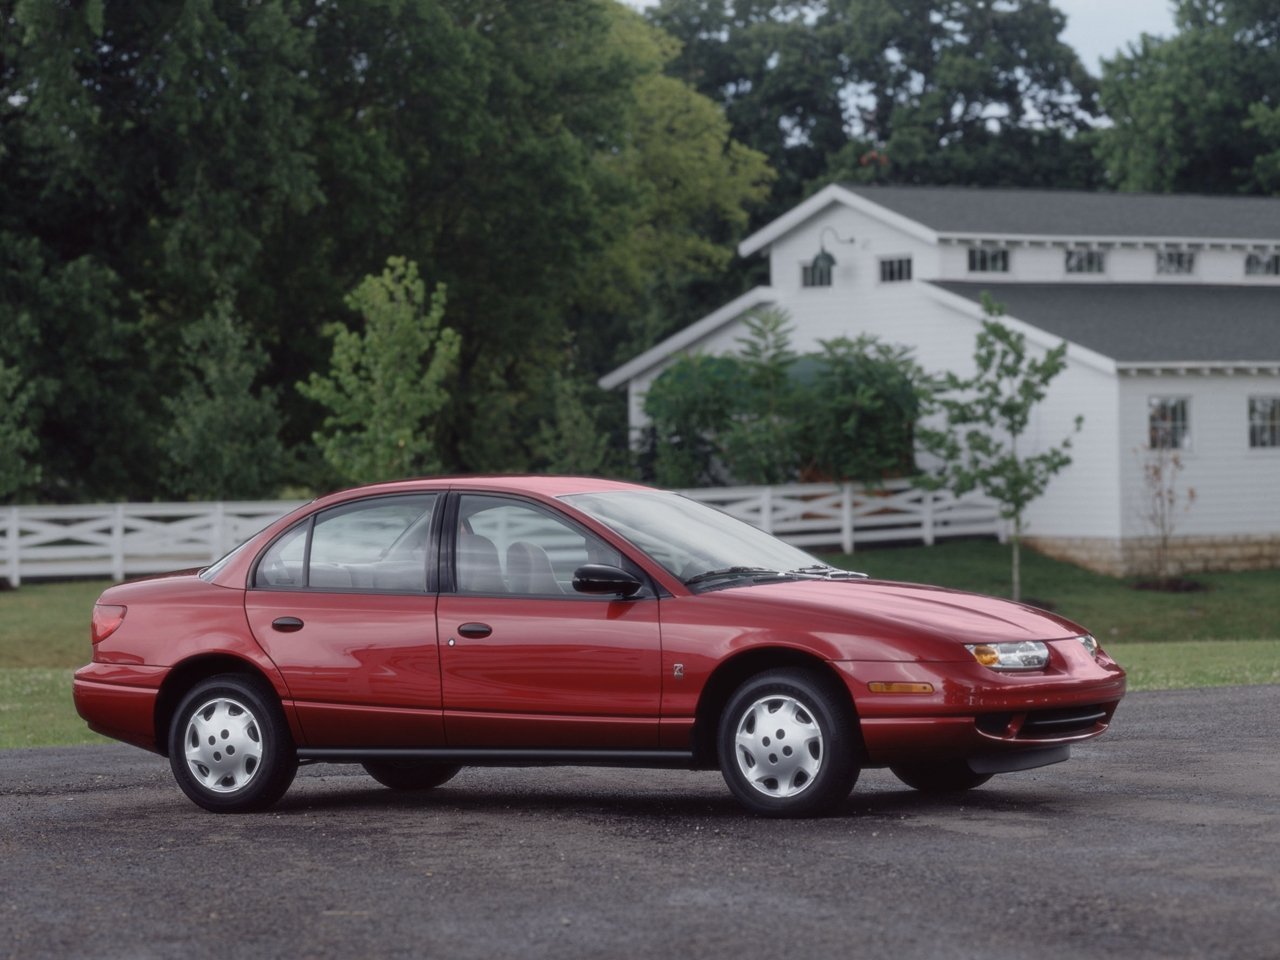 седан Saturn SL 1996 - 2002г выпуска модификация 1.9 AT (100 л.с.)